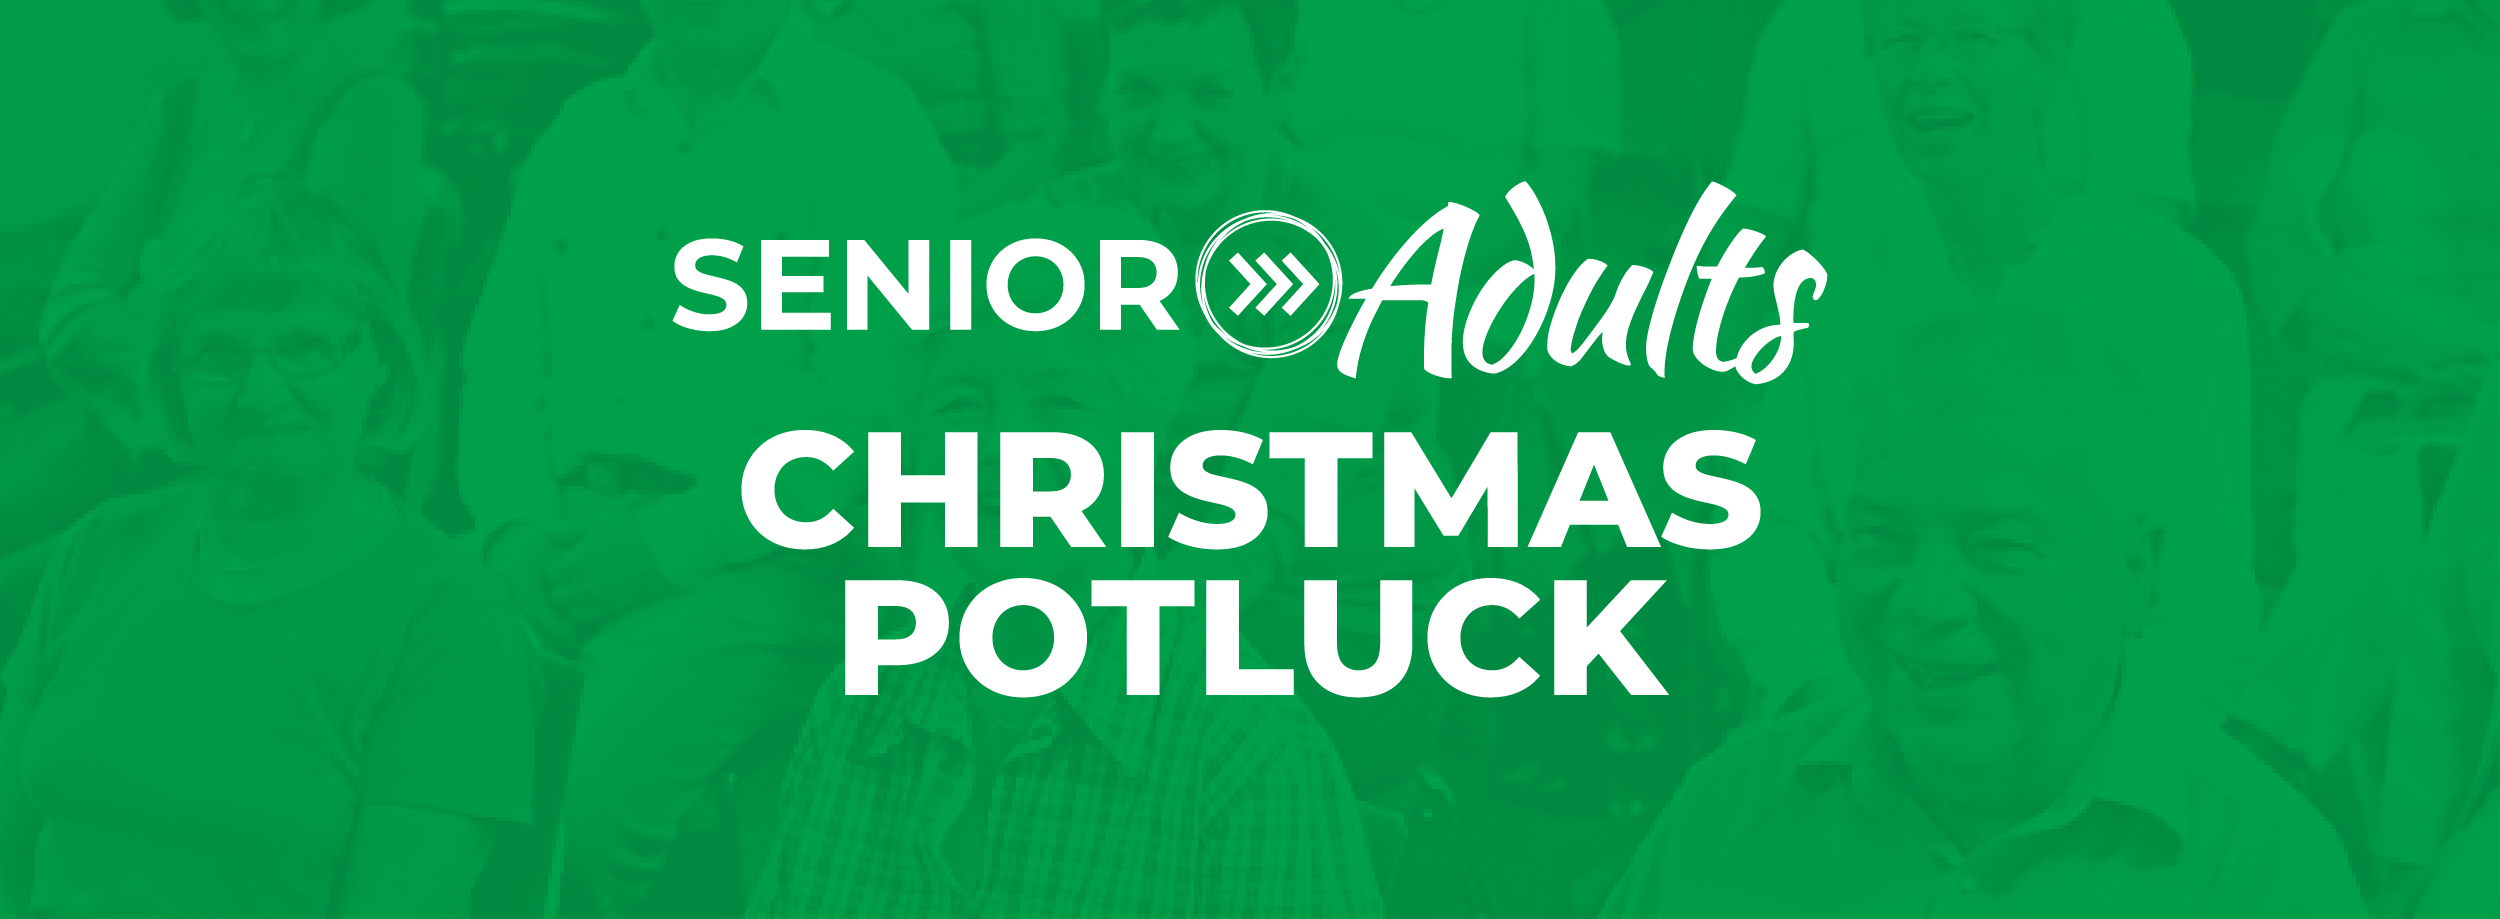 Senior Adult Christmas Potluck